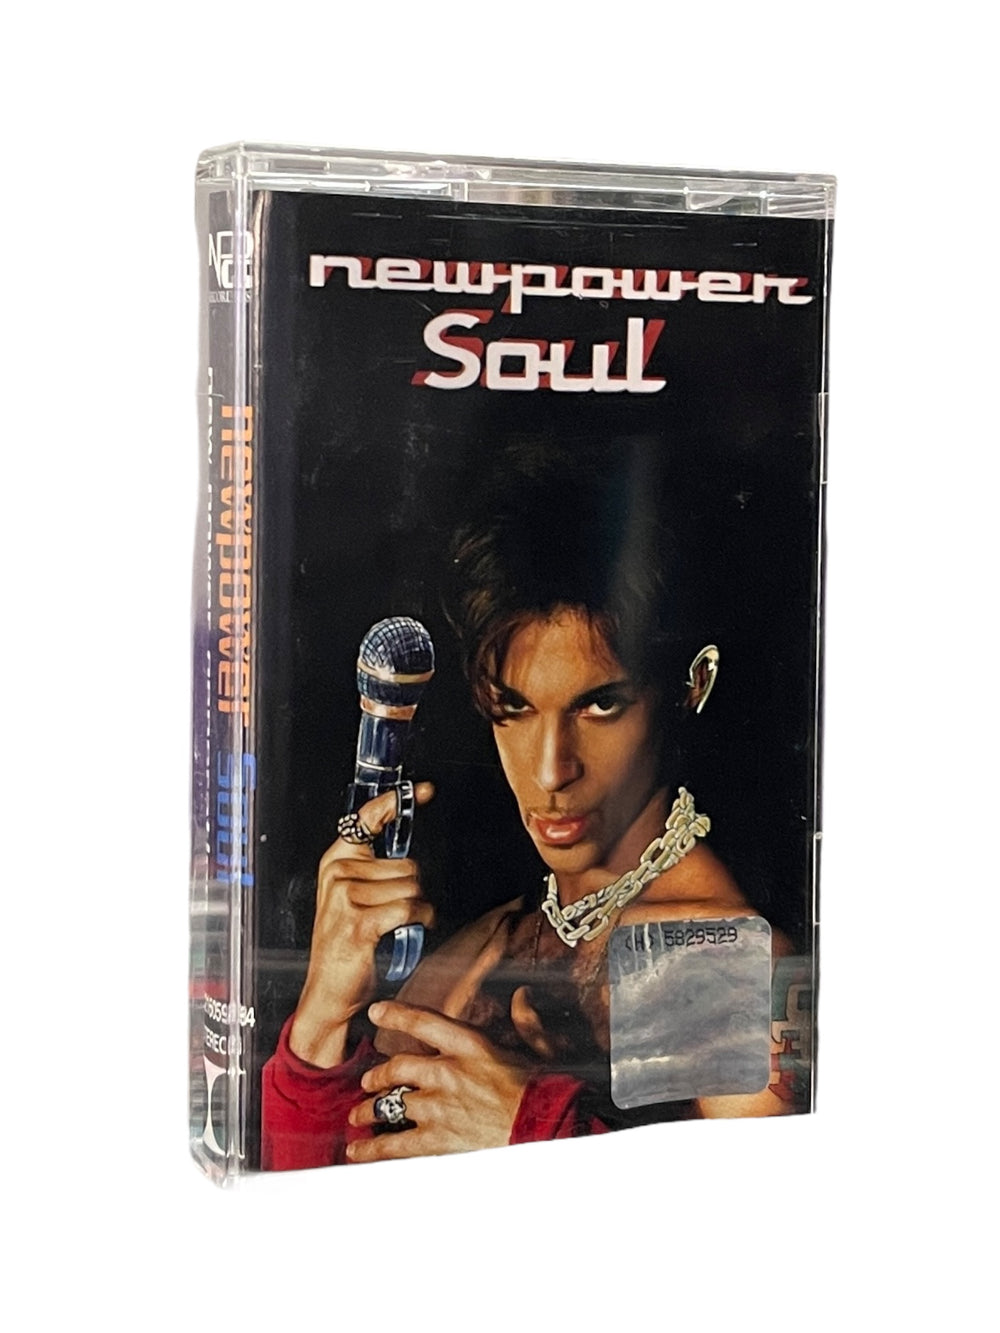 Prince – New Power Generation Newpower Soul Tape Cassette 1999 Original EU Release Prince